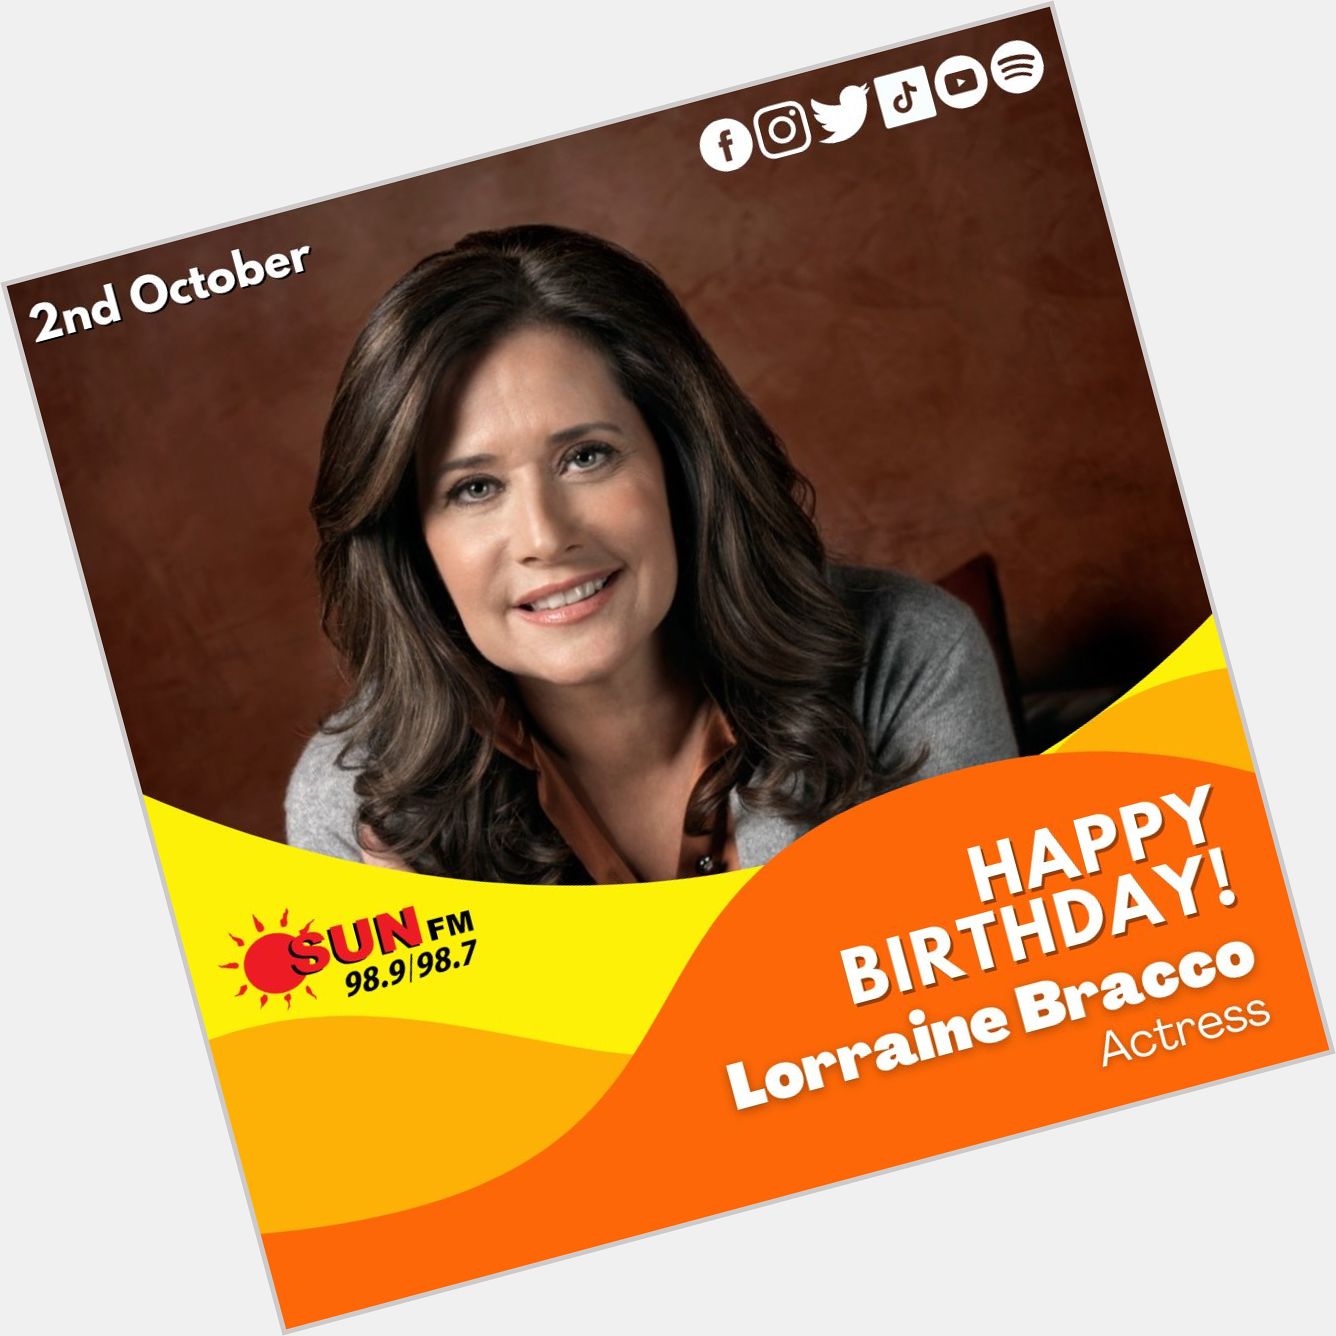 Happy Birthday Lorraine Bracco!!!! 